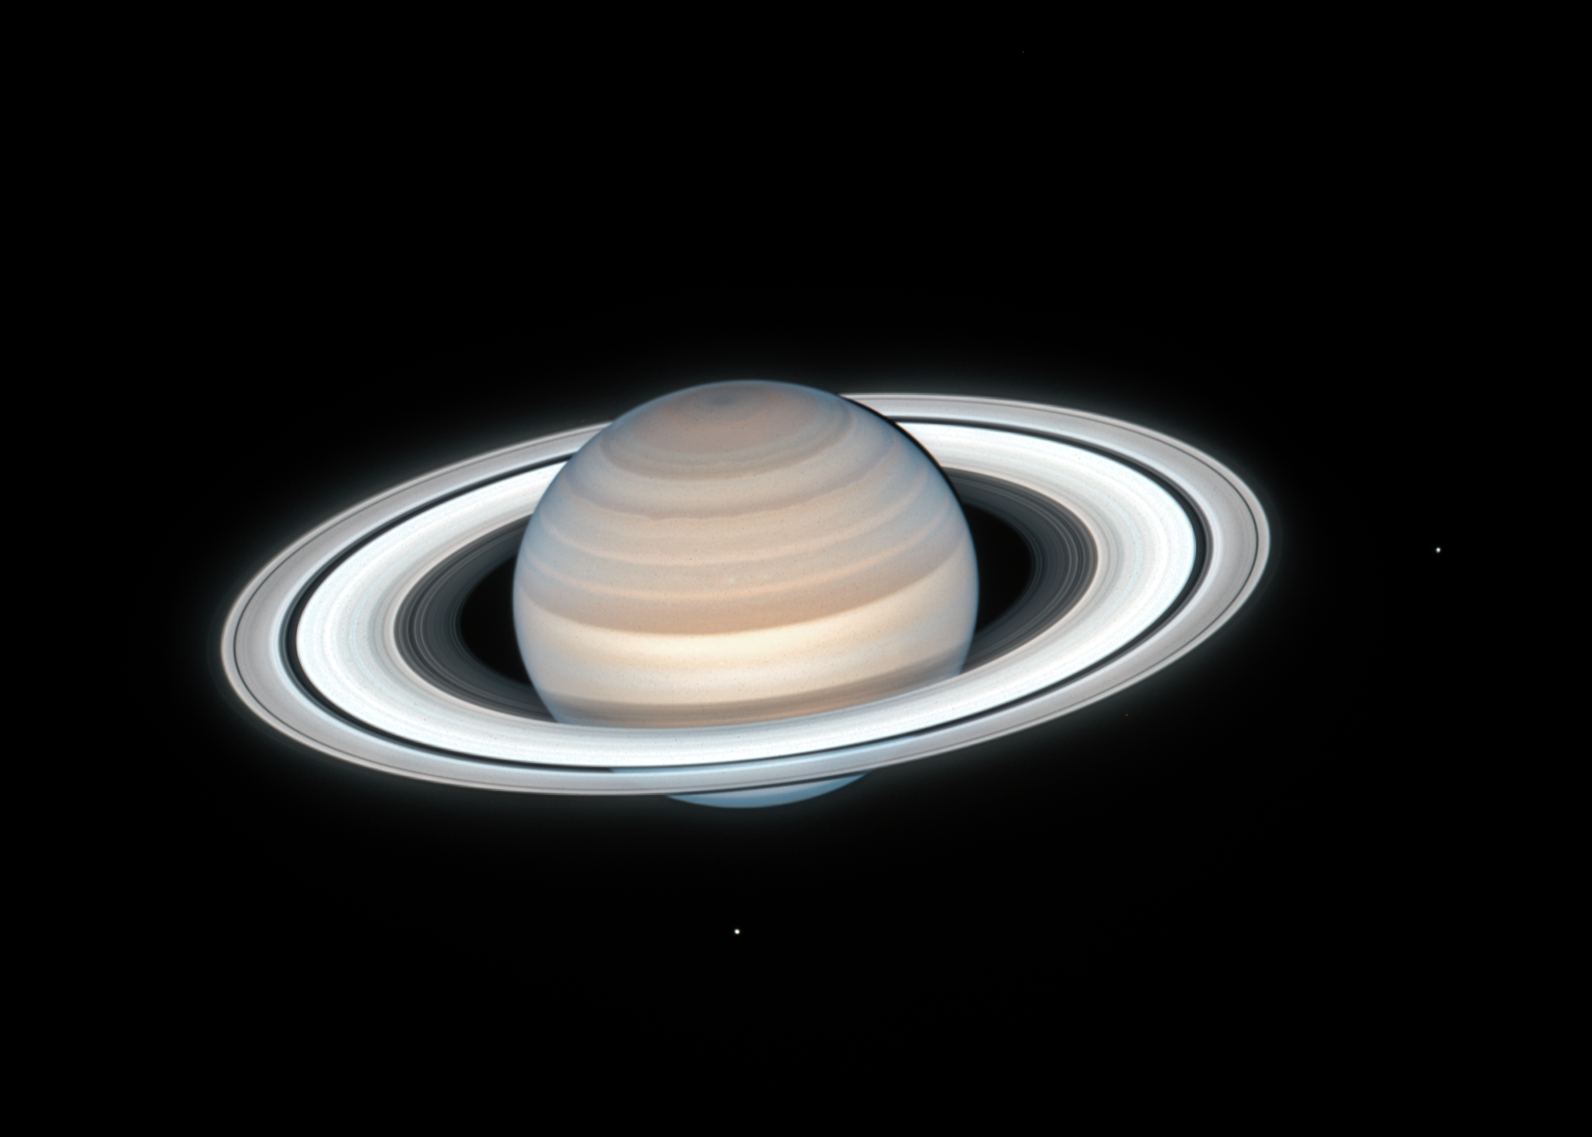 Antonio P. on LinkedIn: Saturn in ultraviolet (Hubble).